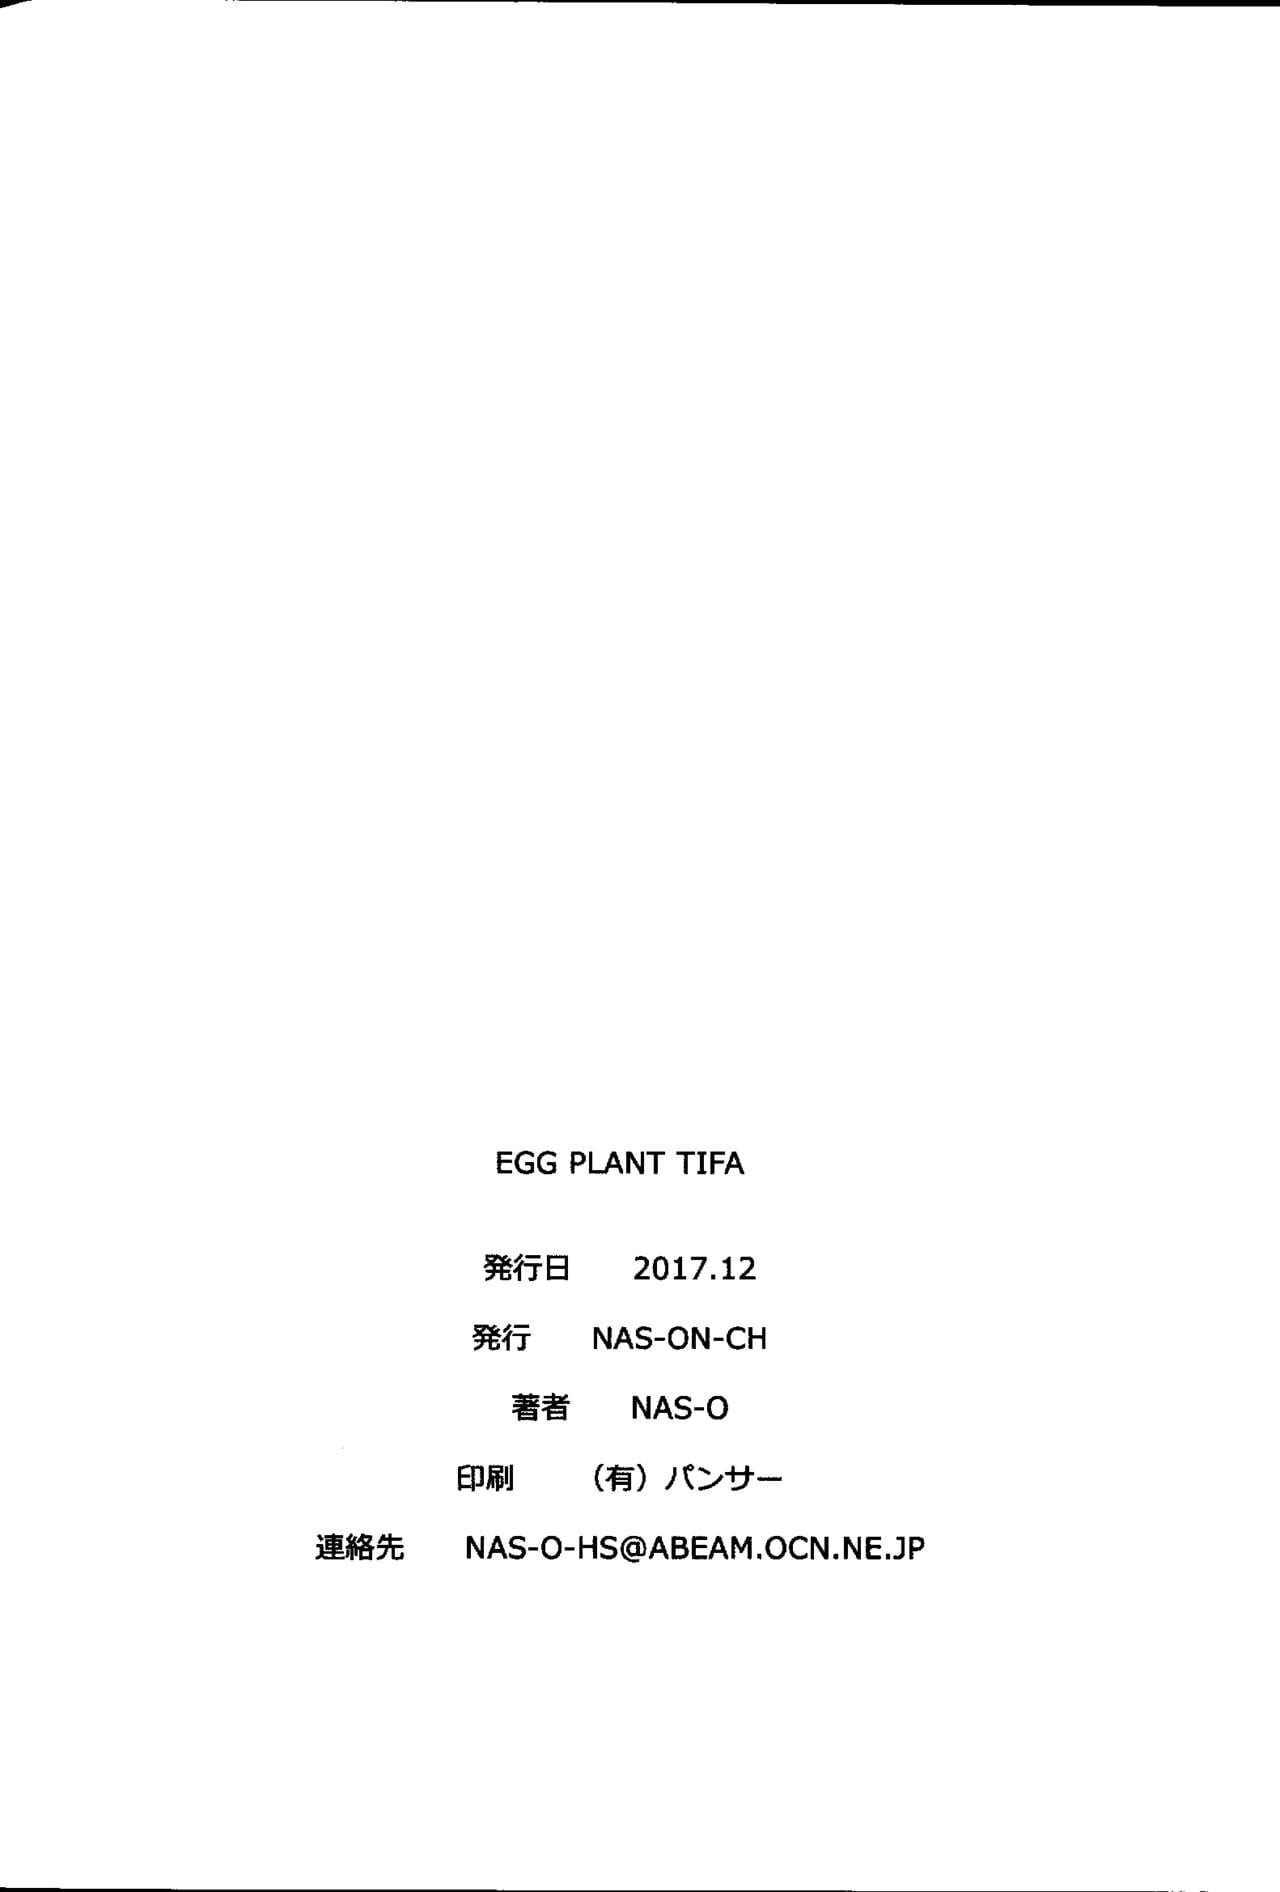 EGG PLANT TIFA page 1